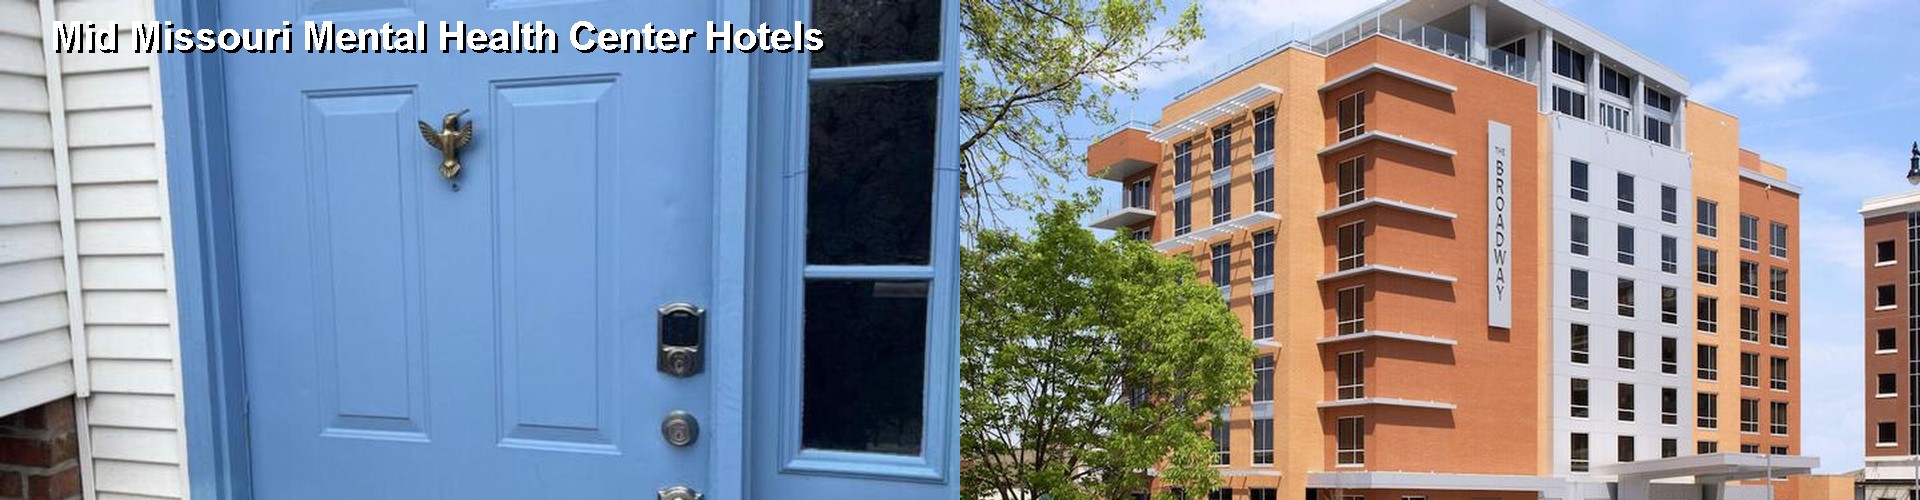 5 Best Hotels near Mid Missouri Mental Health Center